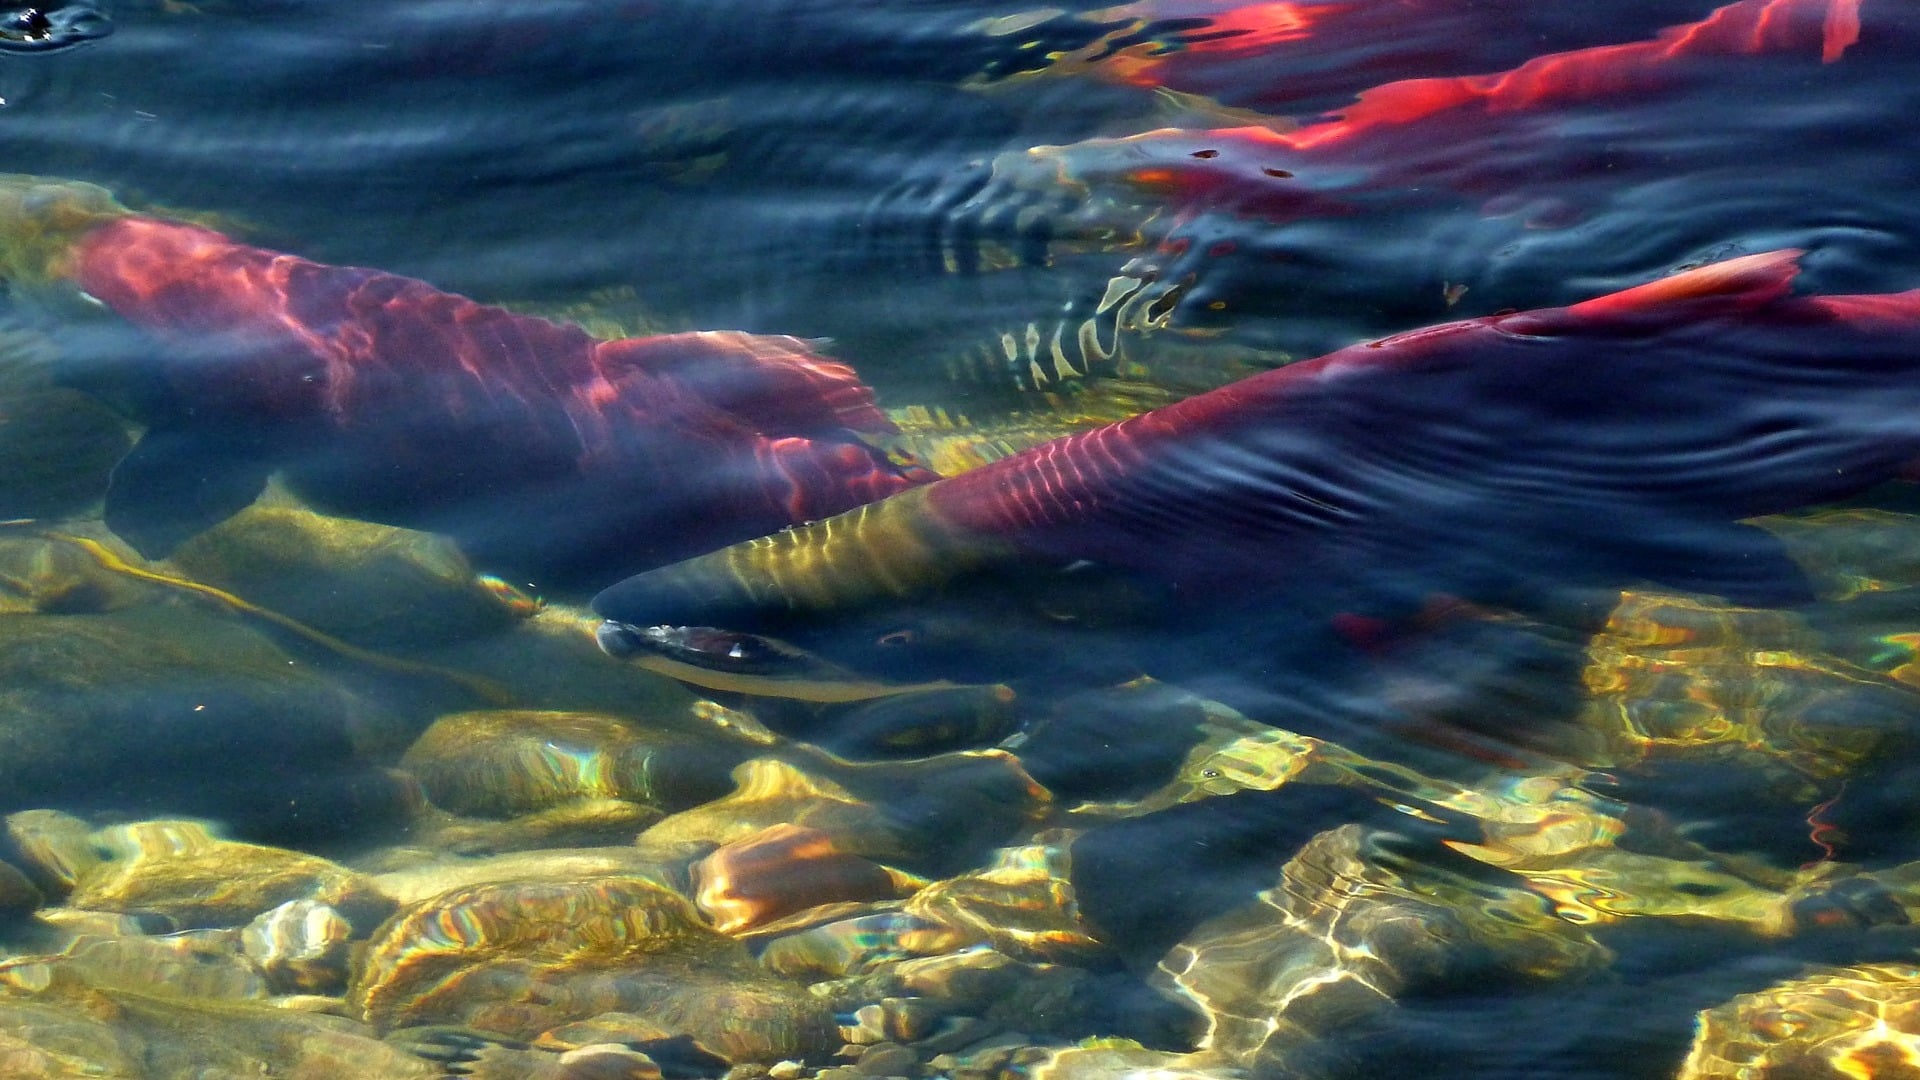 Shocking salmon returns to the Fraser